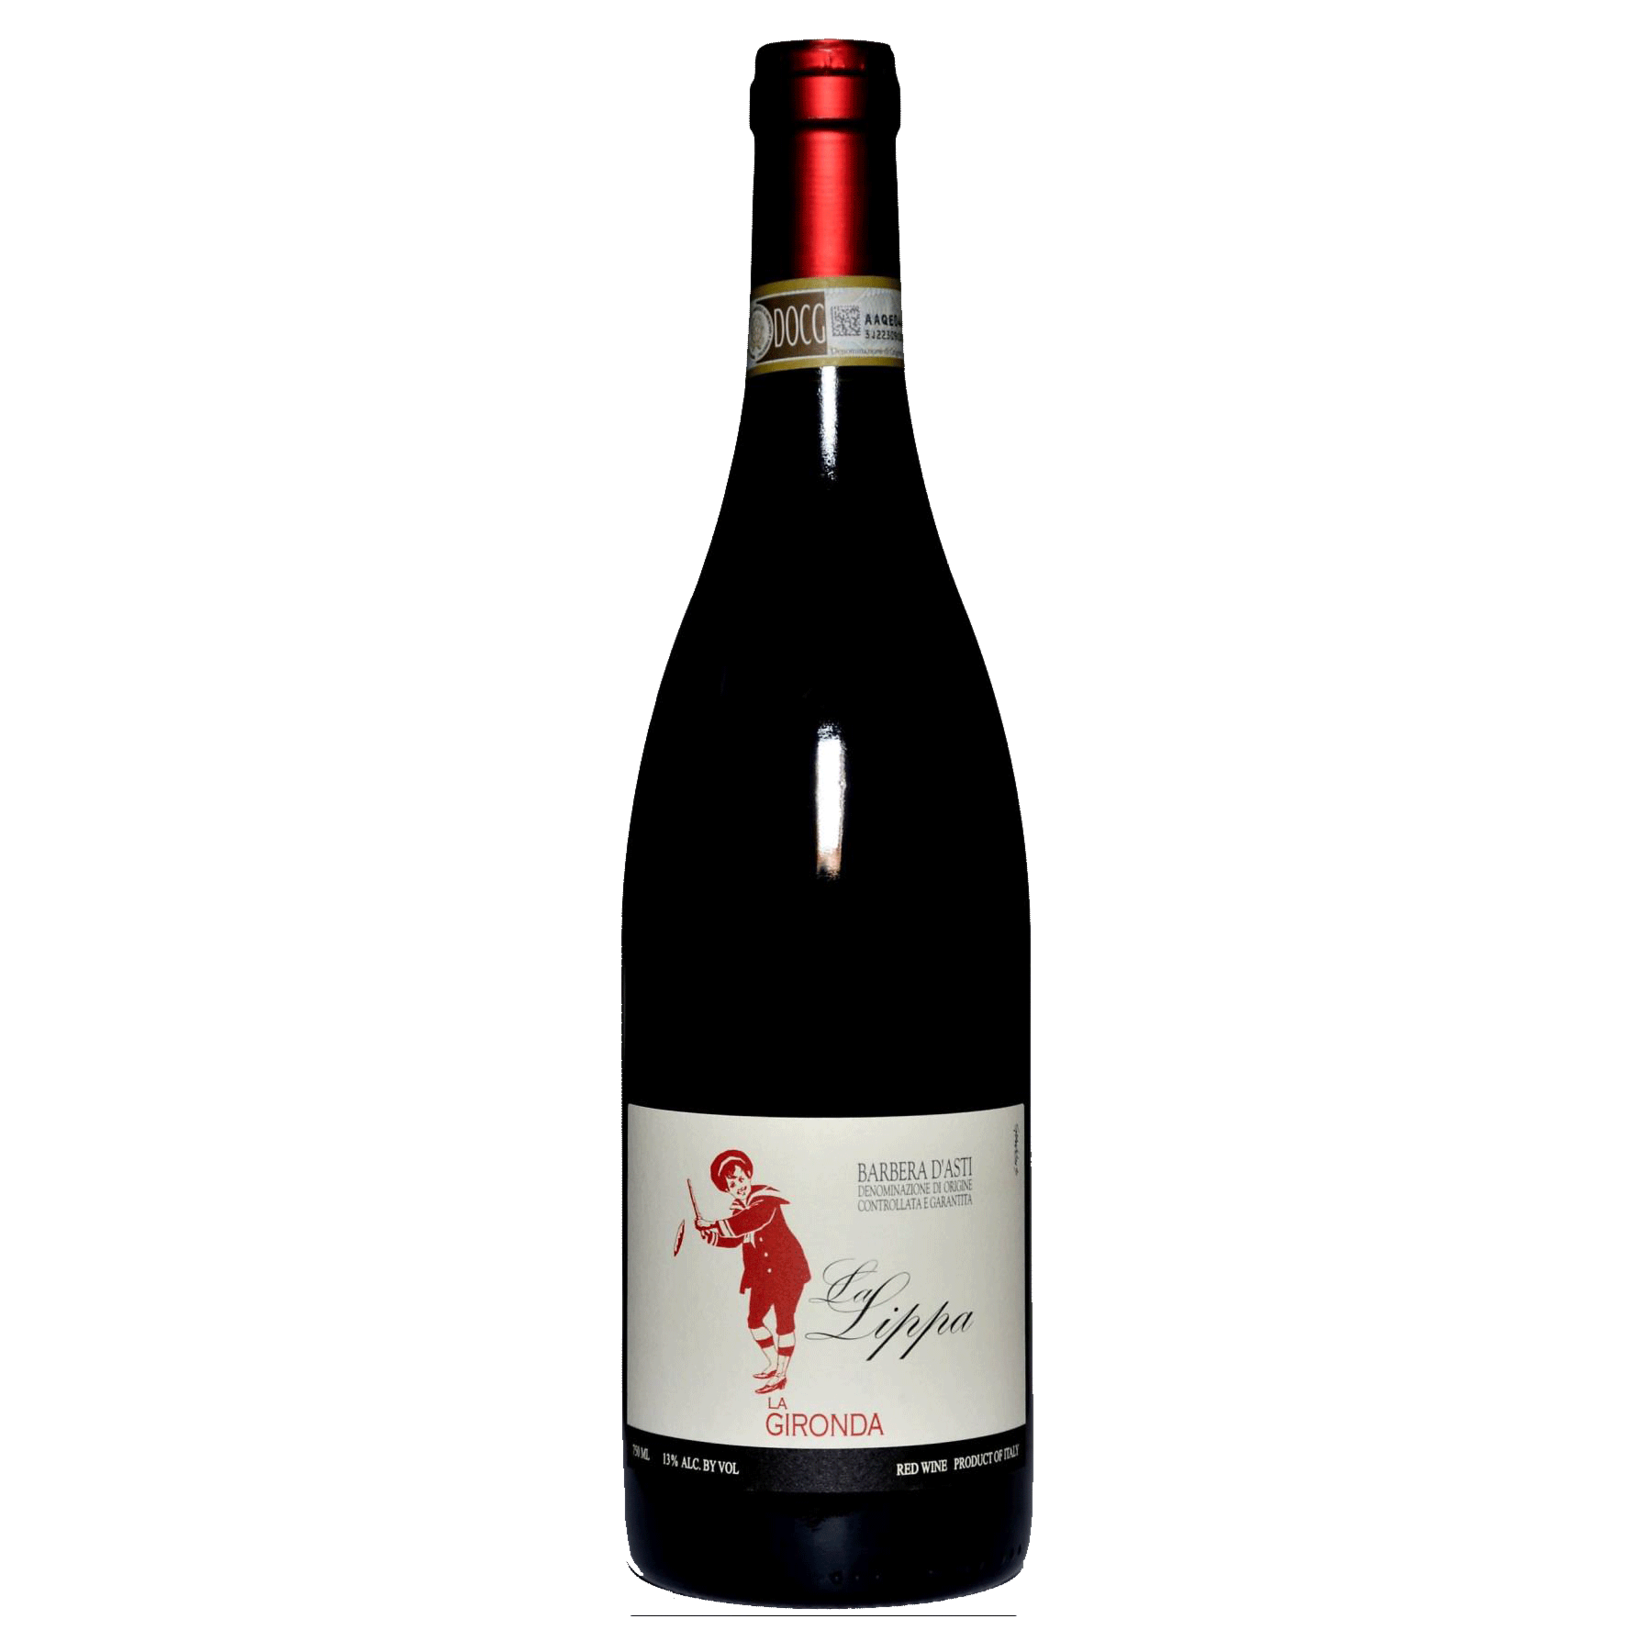 Wine Barbera d'Asti 'La Lippa' La Gironda 2018